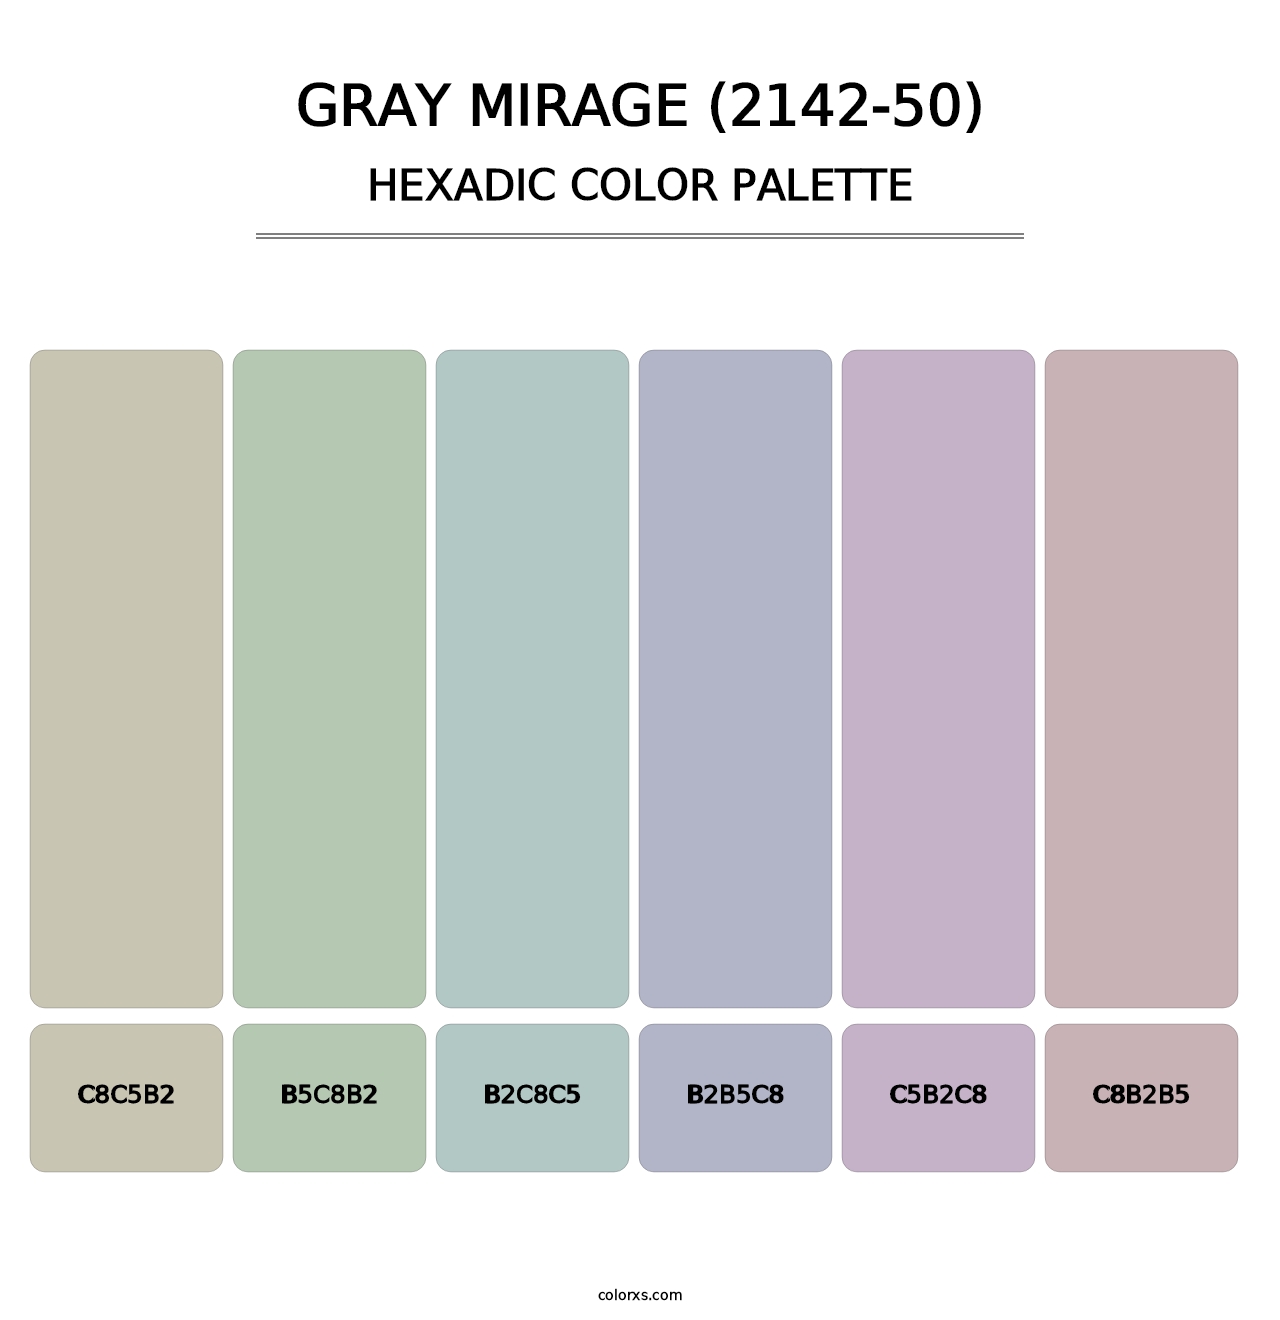 Gray Mirage (2142-50) - Hexadic Color Palette